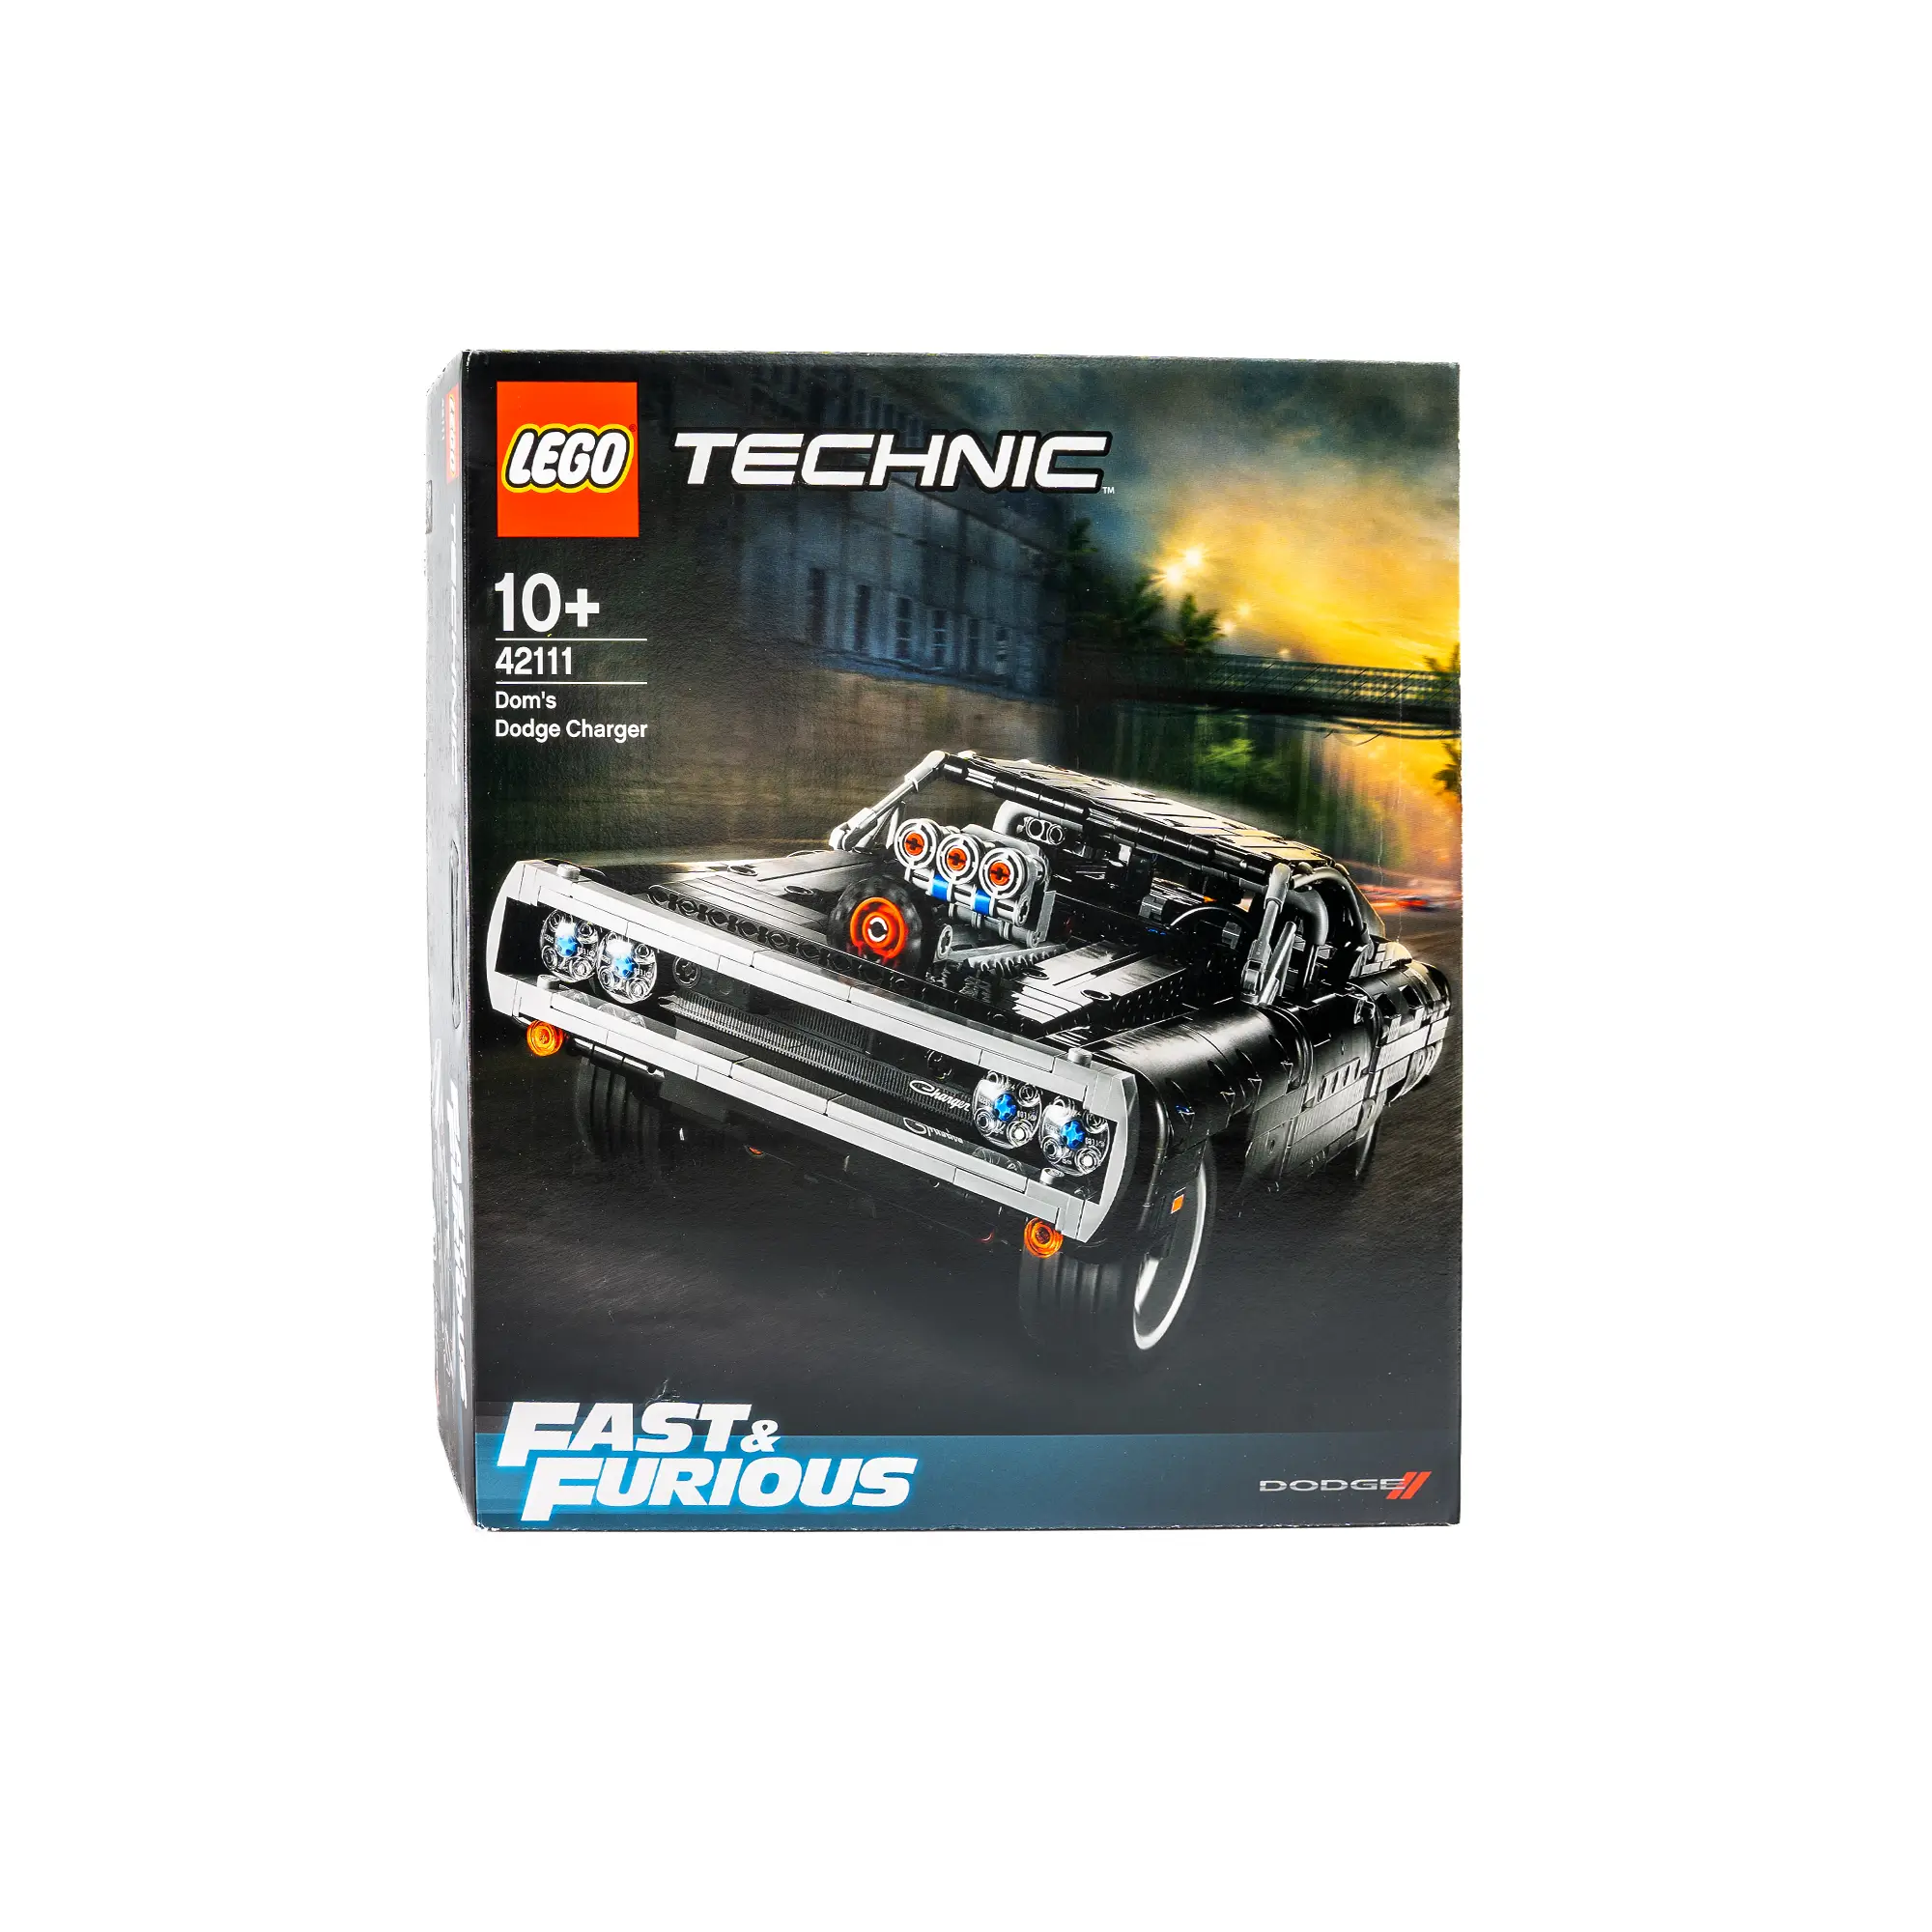 LEGO Technic T.F.A.T.F. Doms Dodge Charg 42111